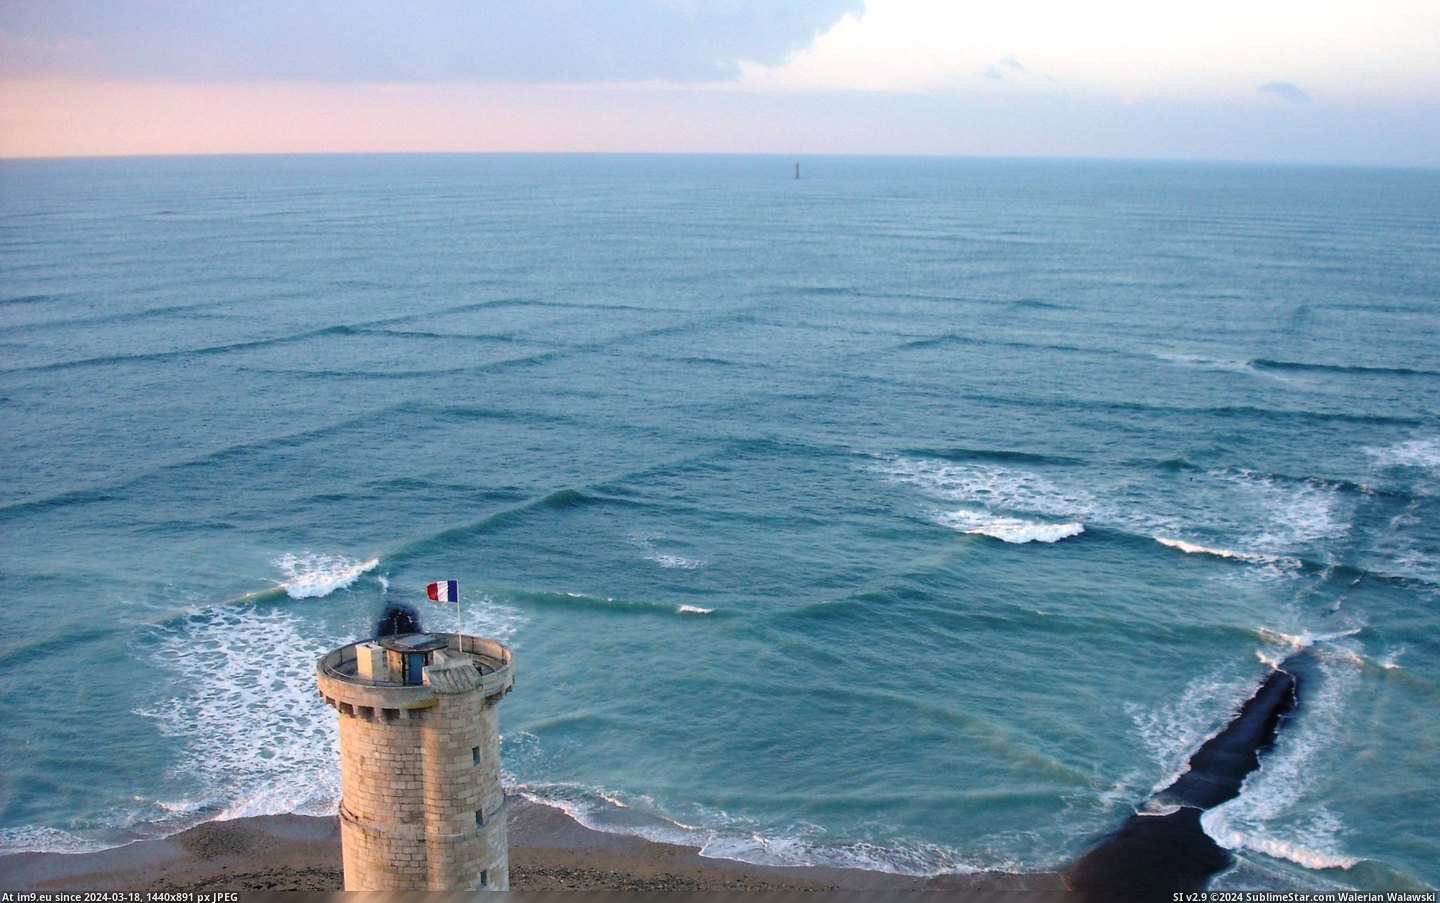 #French #Coastline #Grid #Waves [Pics] Grid waves on the French coastline Pic. (Obraz z album My r/PICS favs))